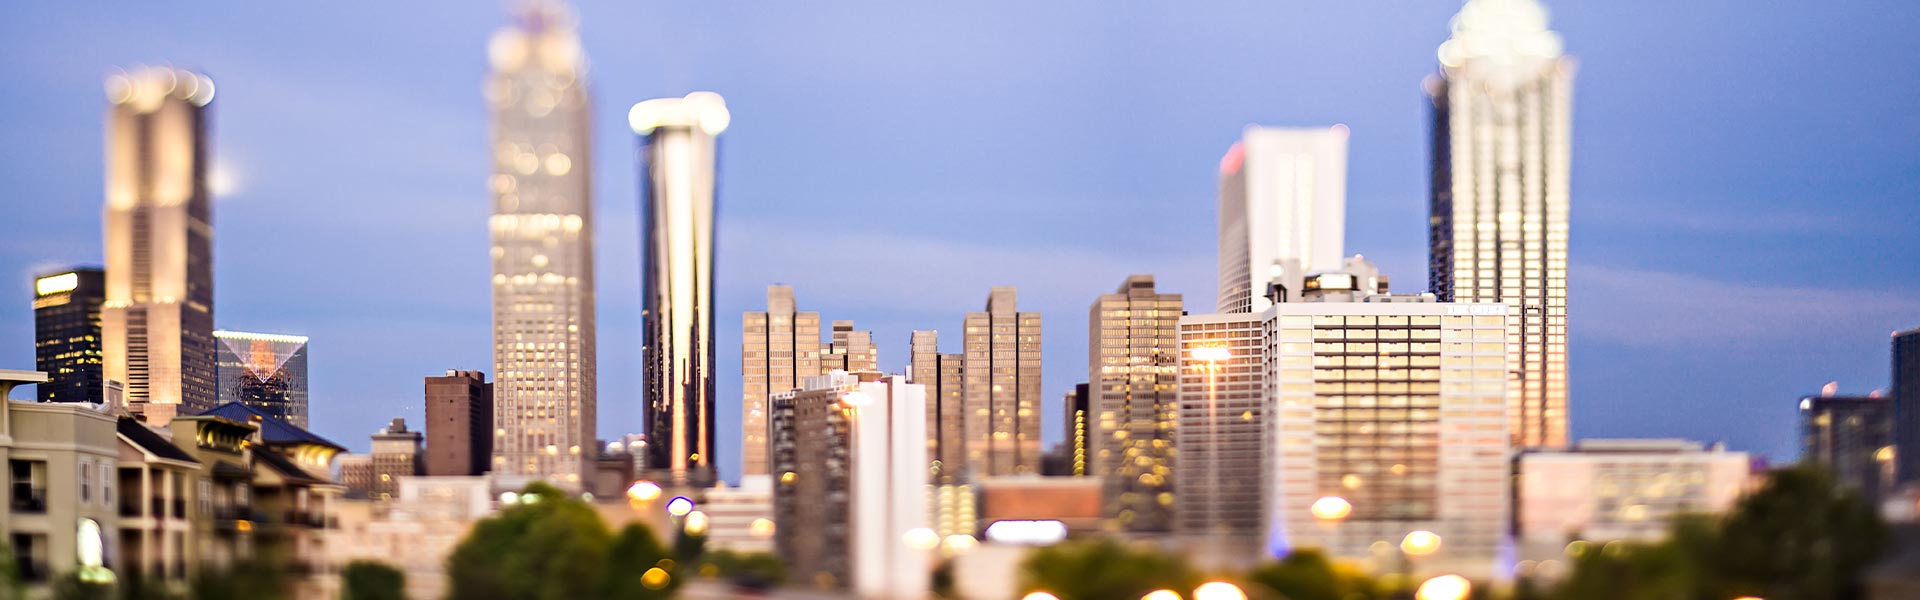 Atlanta Georgia City Skyline